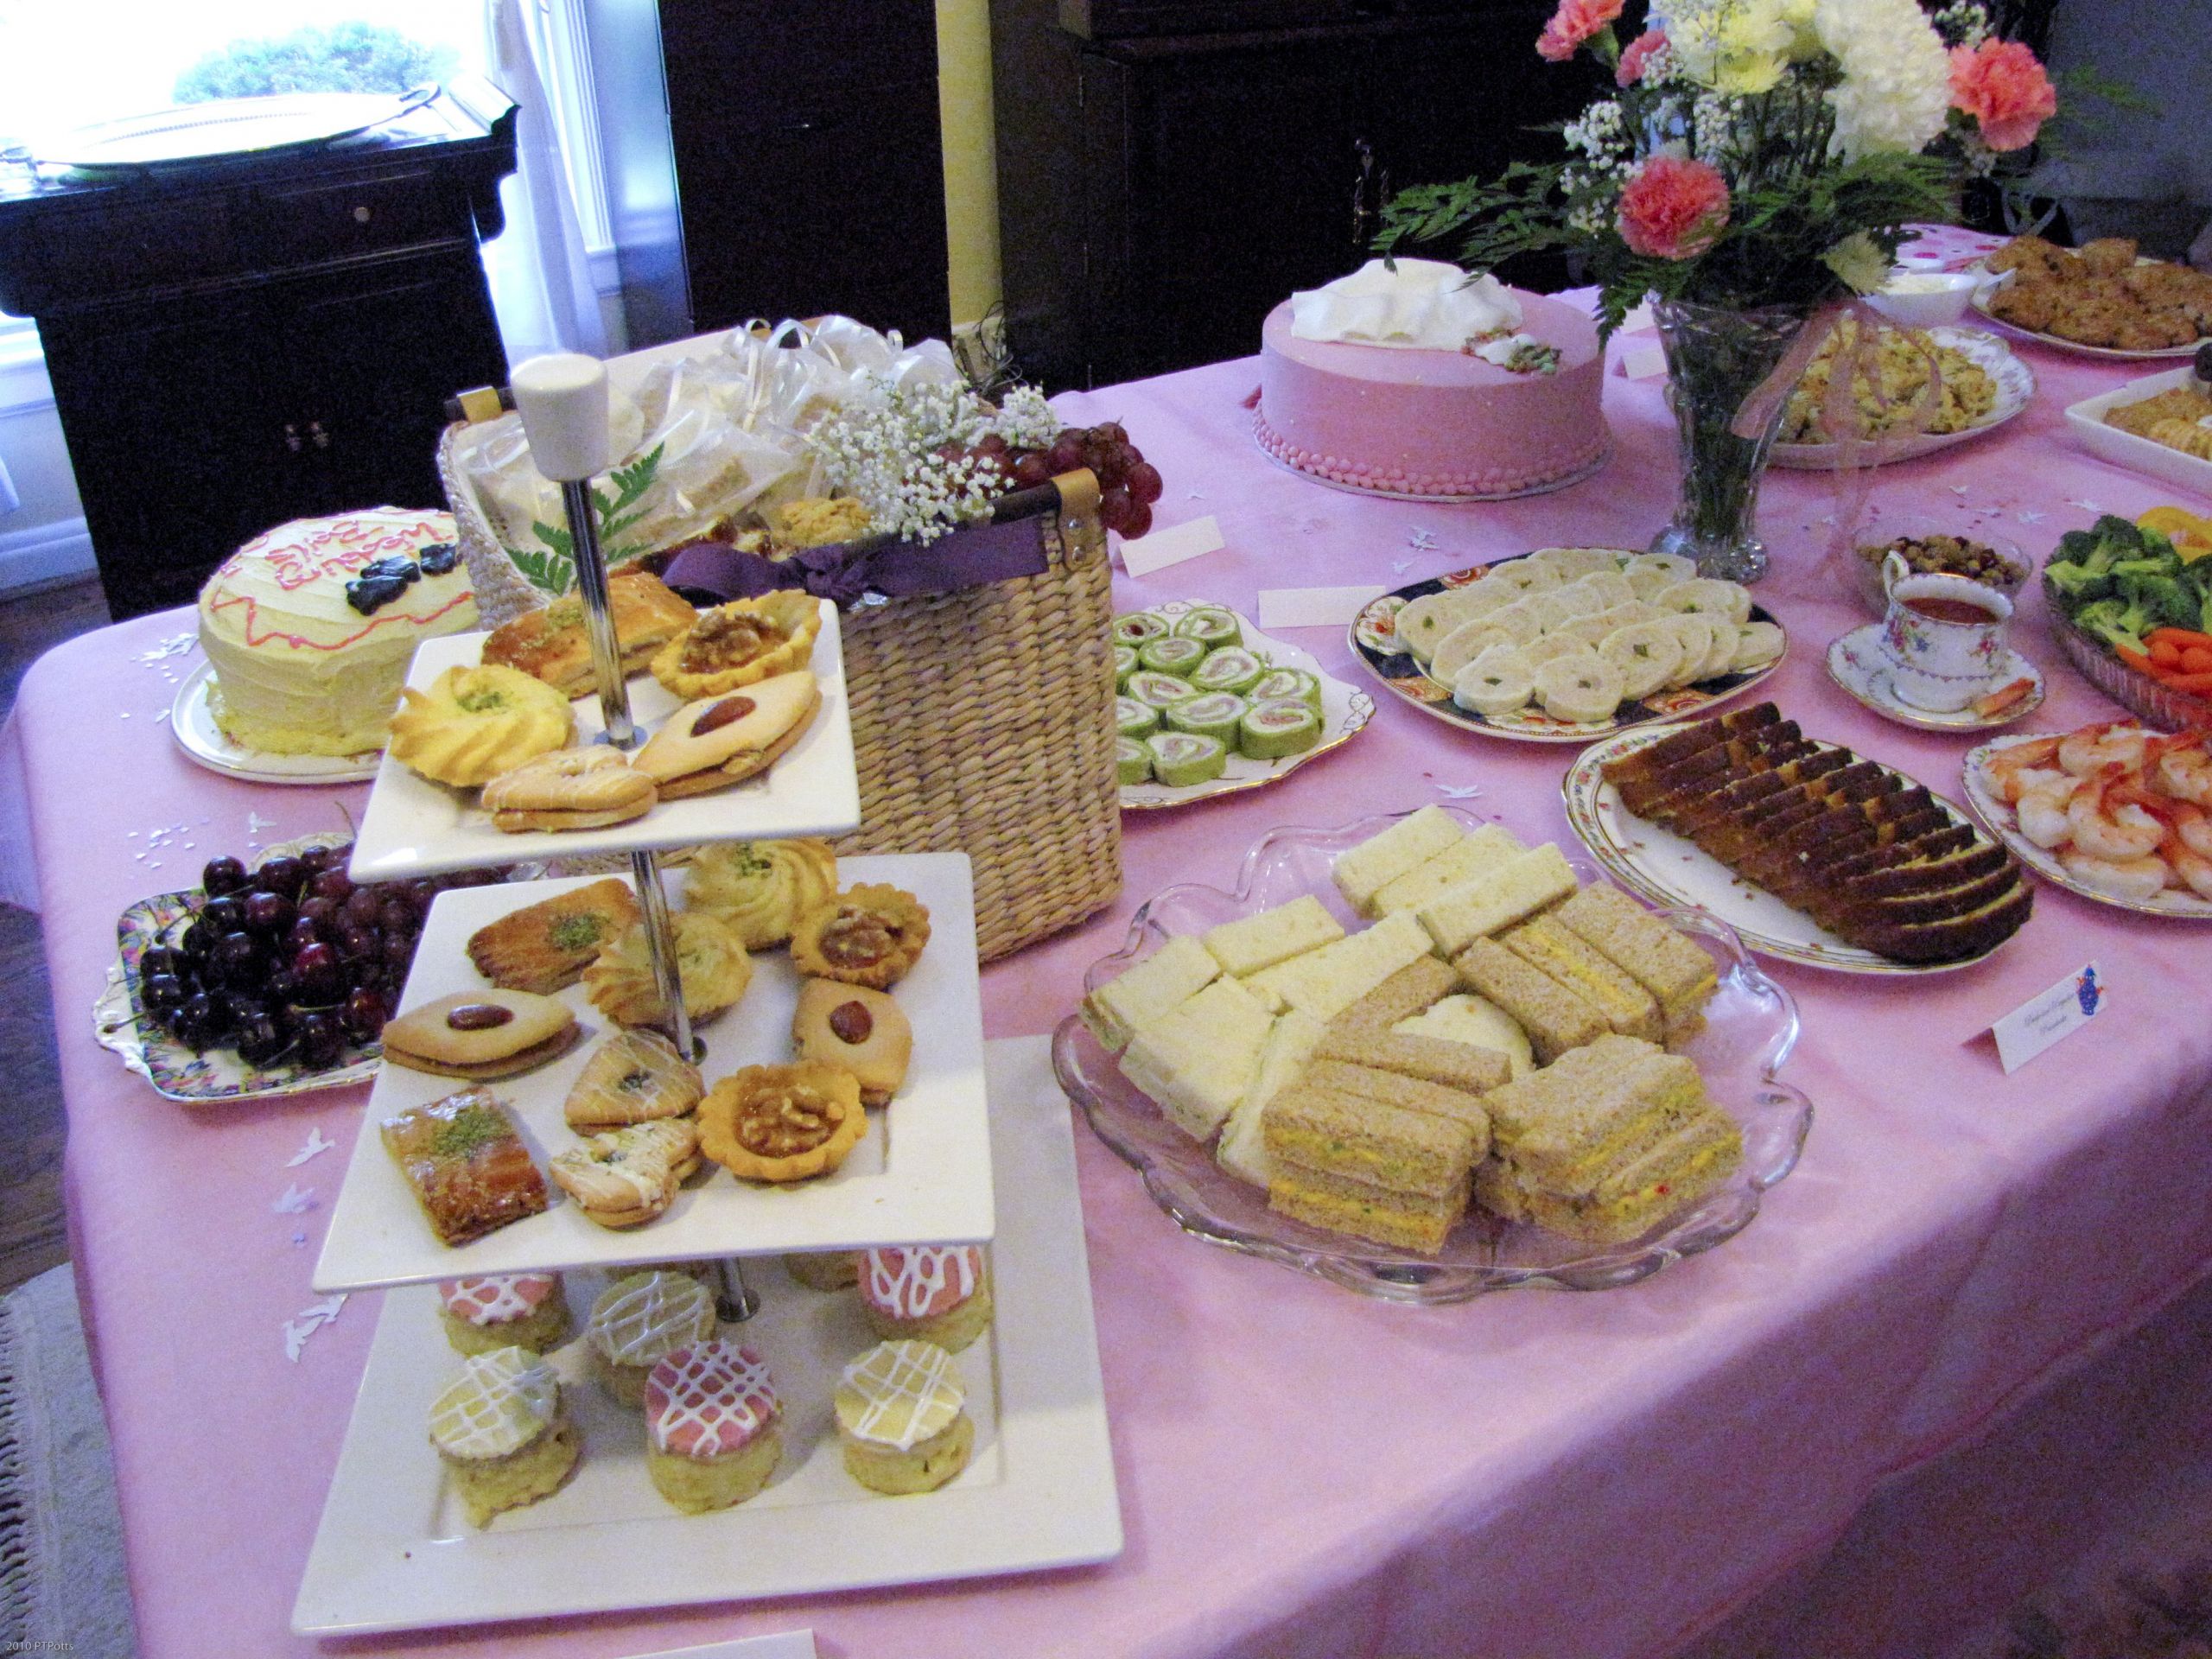 Ideas For A Tea Party Themed Bridal Shower
 A Jane Austen Tea Party Bridal Shower